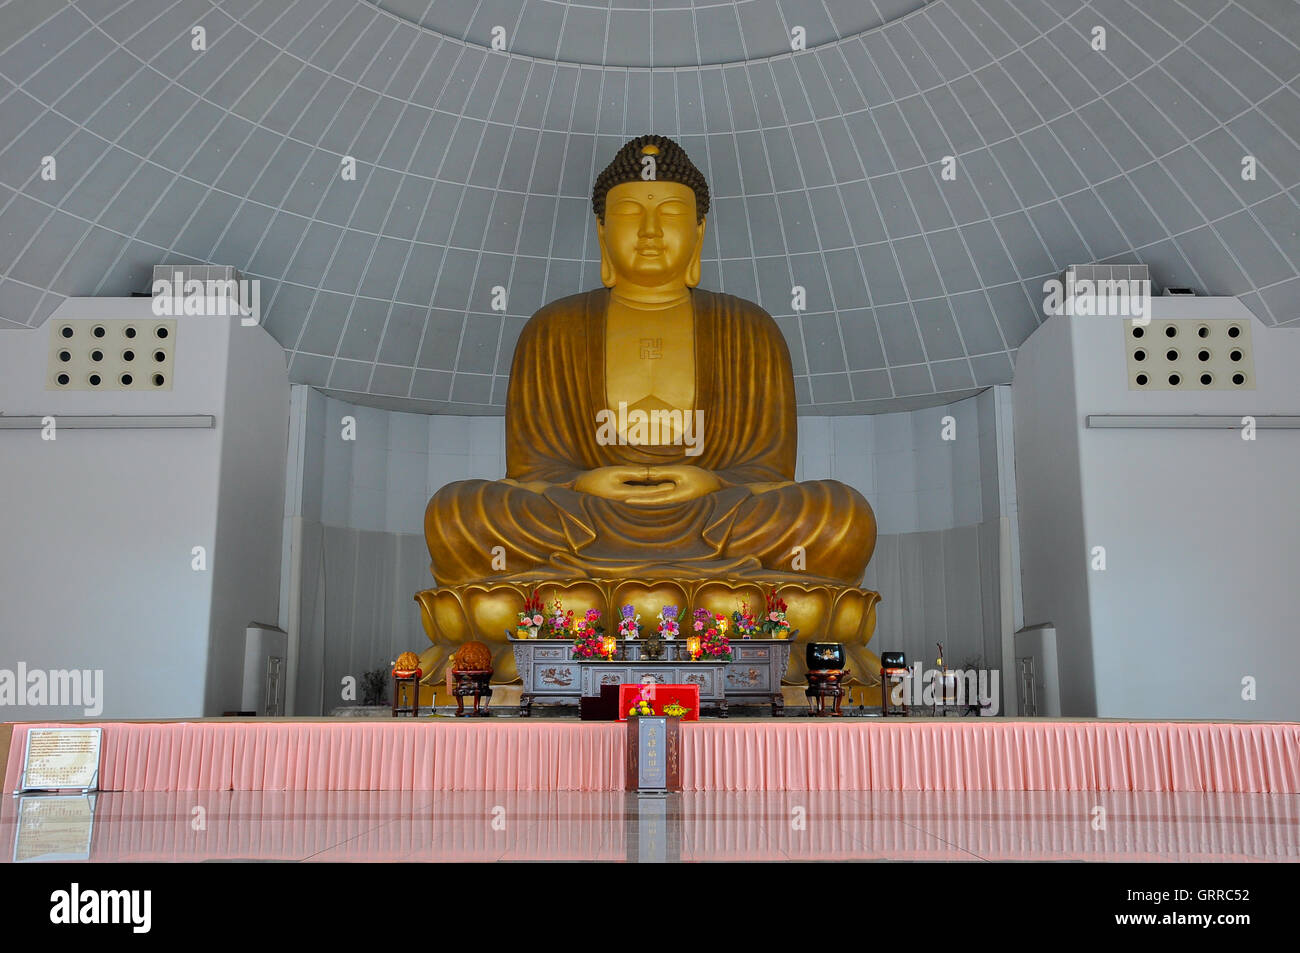 Singapur, 13. April 2011 - Big Buddha-Statue in ehrwürdigen Hong Choon Memorial Hall, Singapur Stockfoto